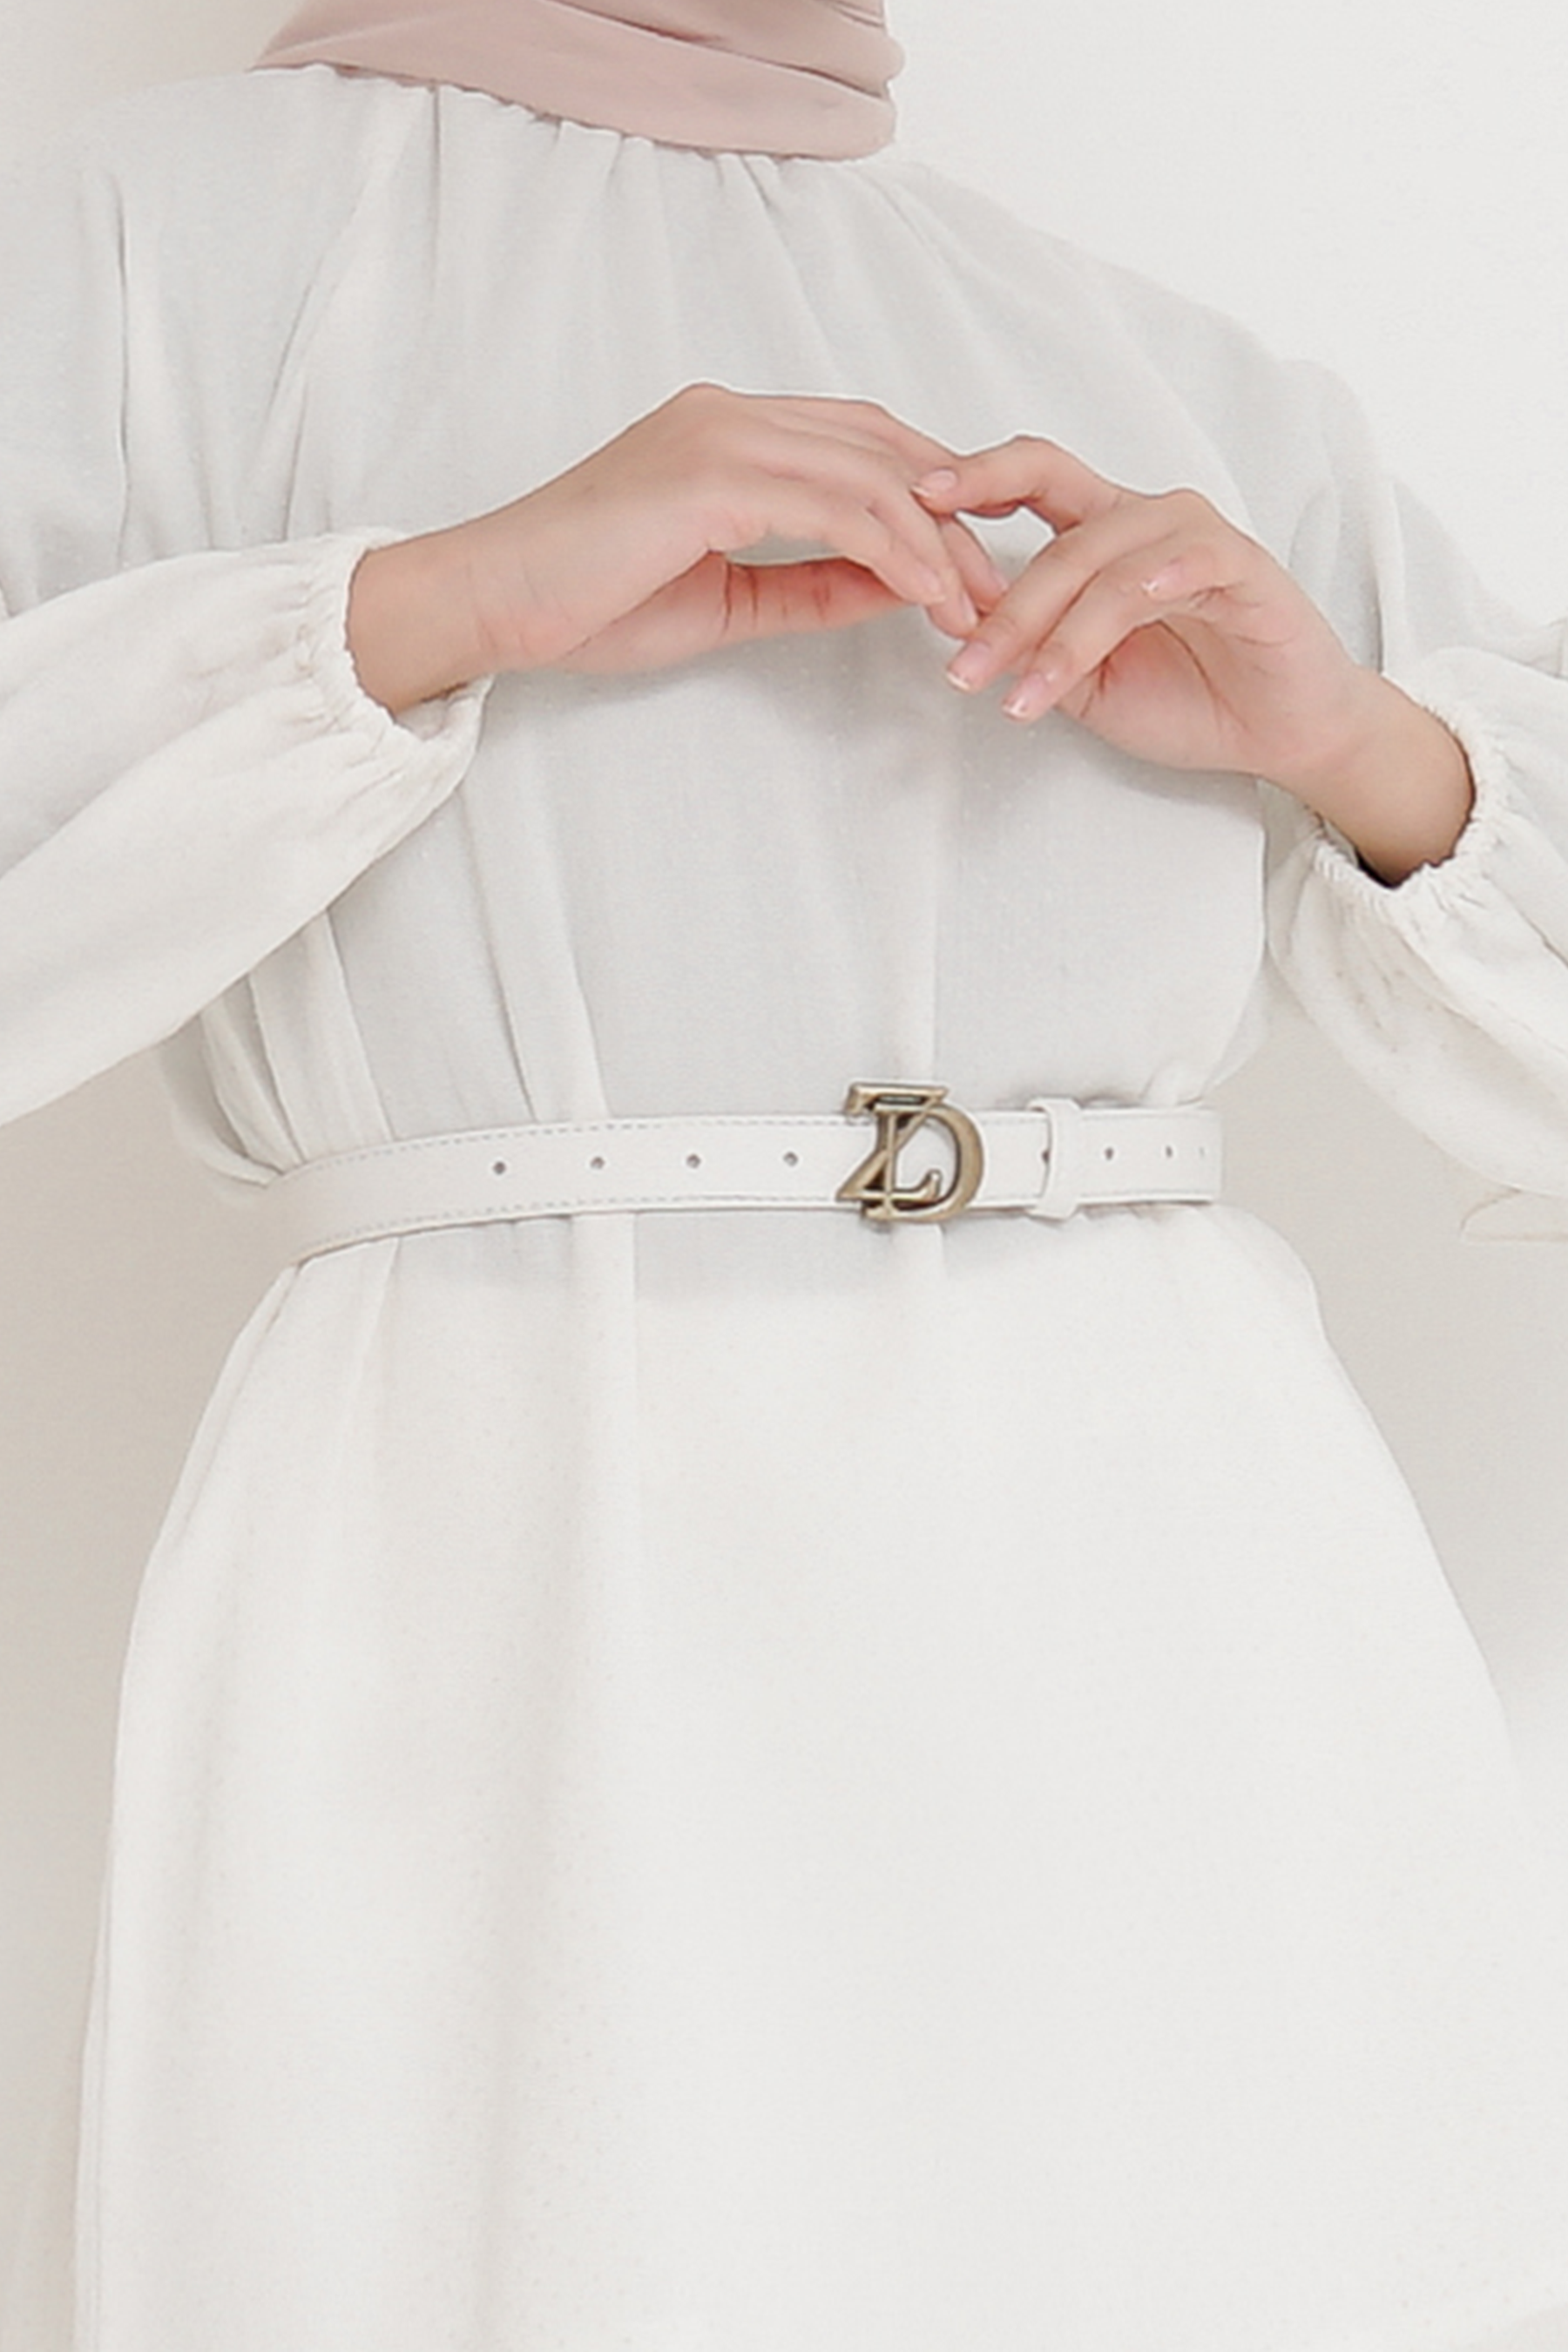 ZD Belt - White